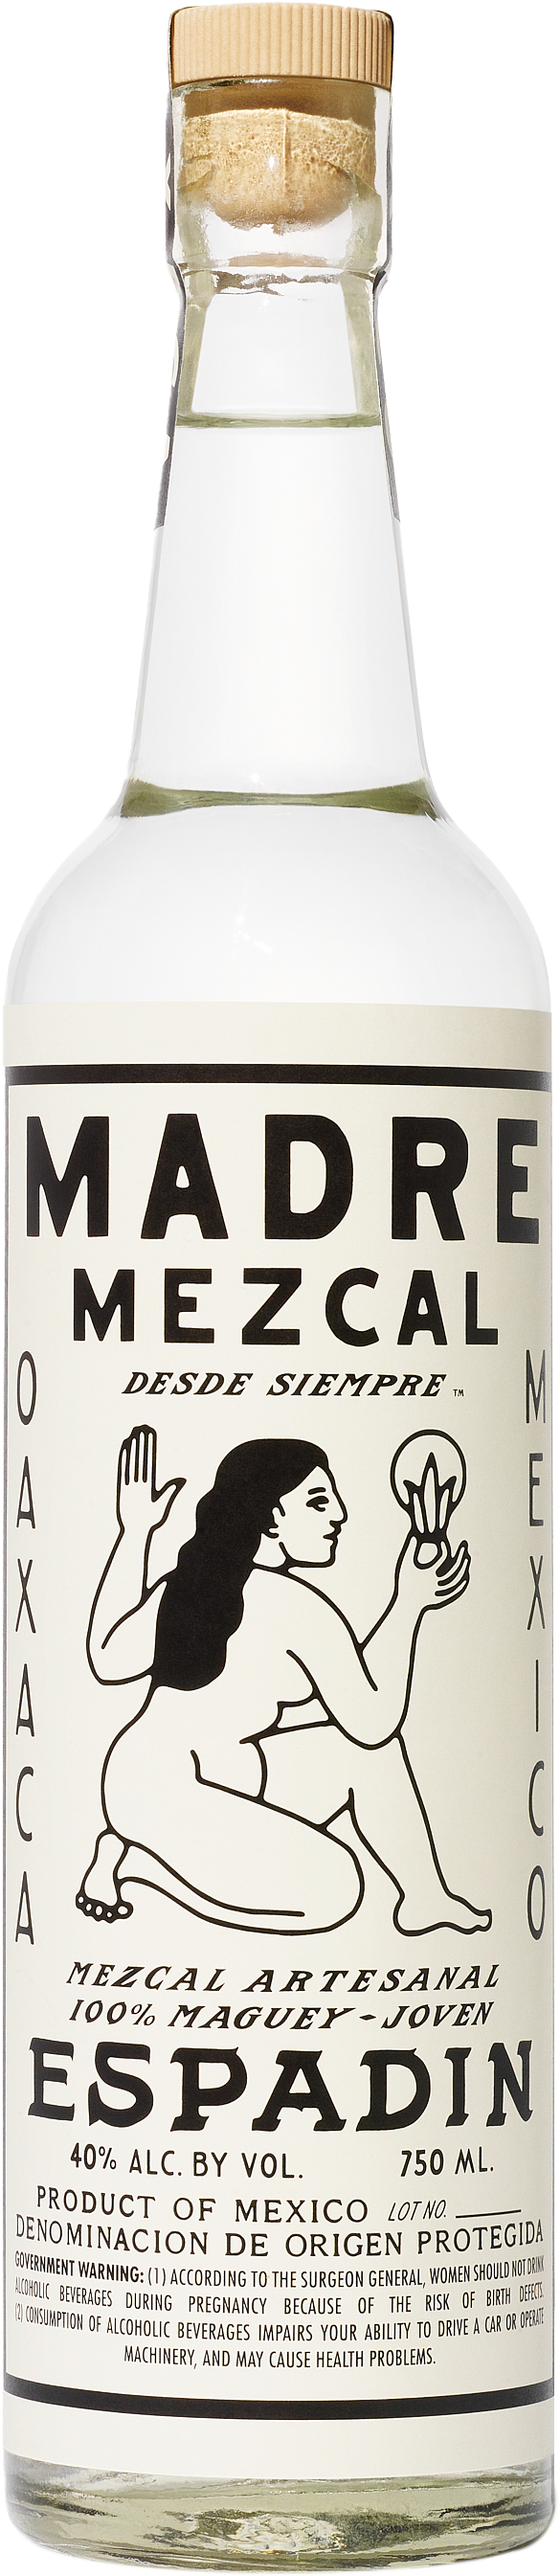 Madre Mezcal Espadin (750ml)